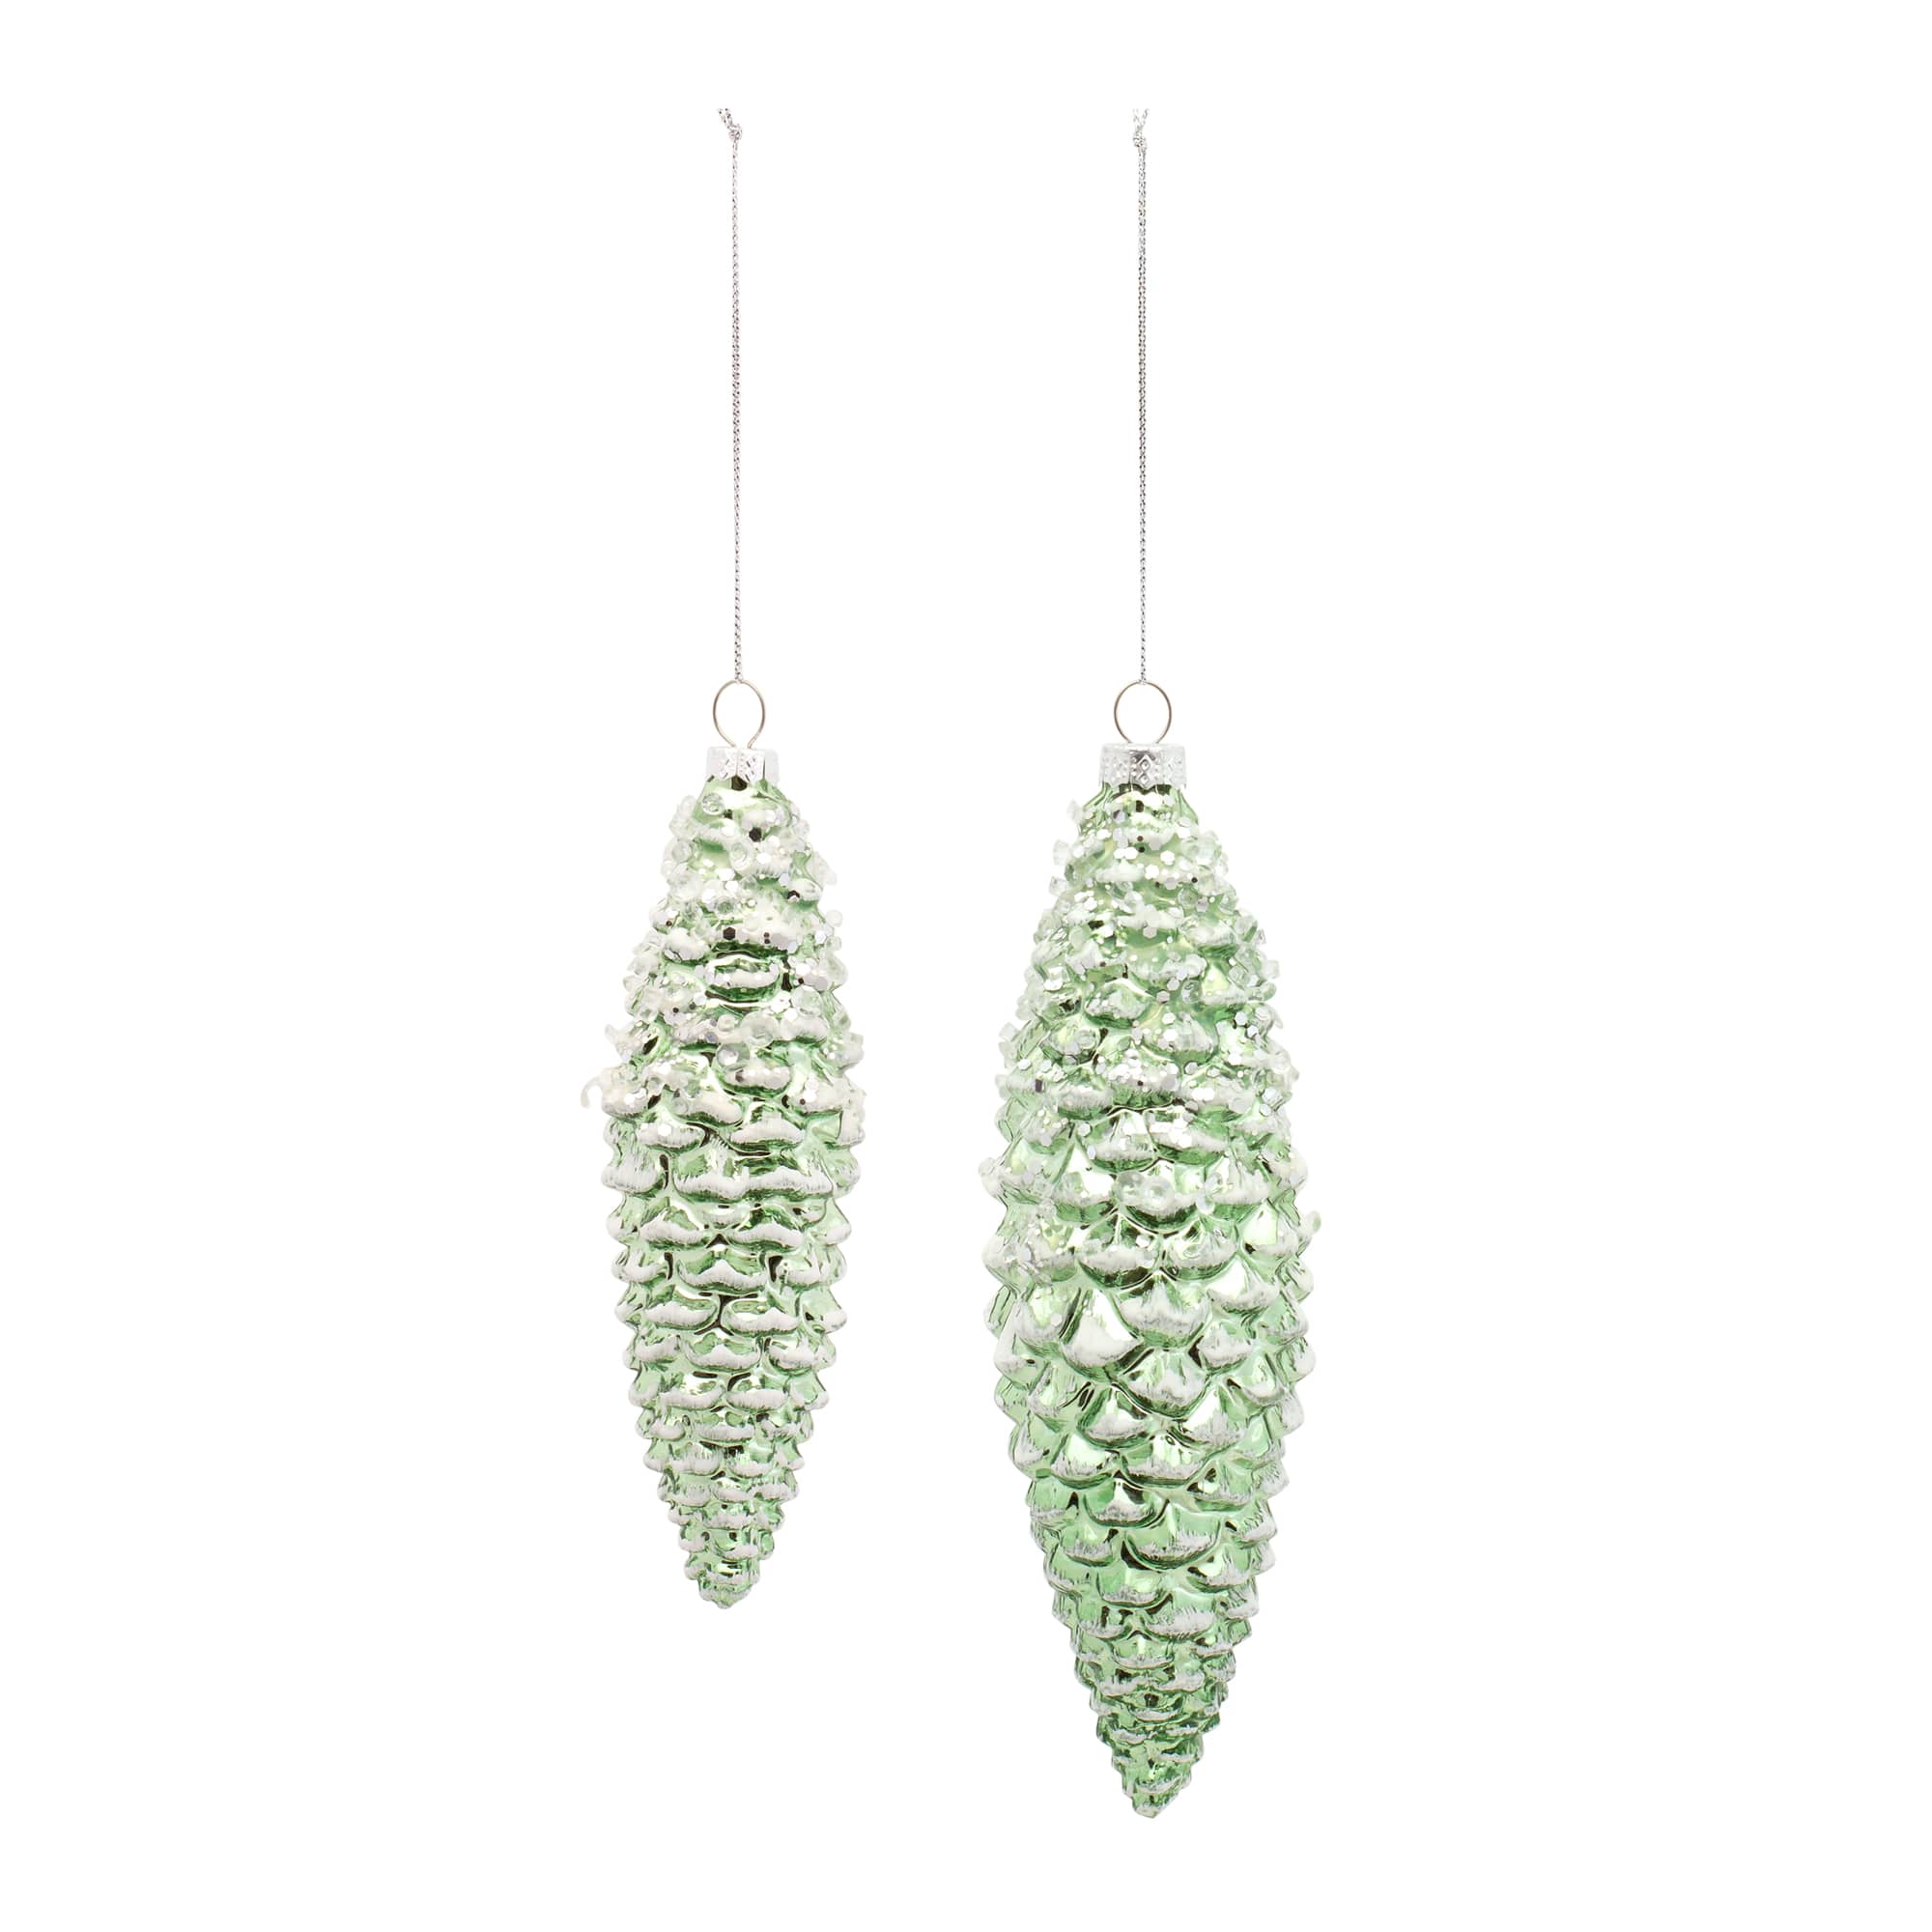 12ct. Green Glass Pinecone Ornament Set